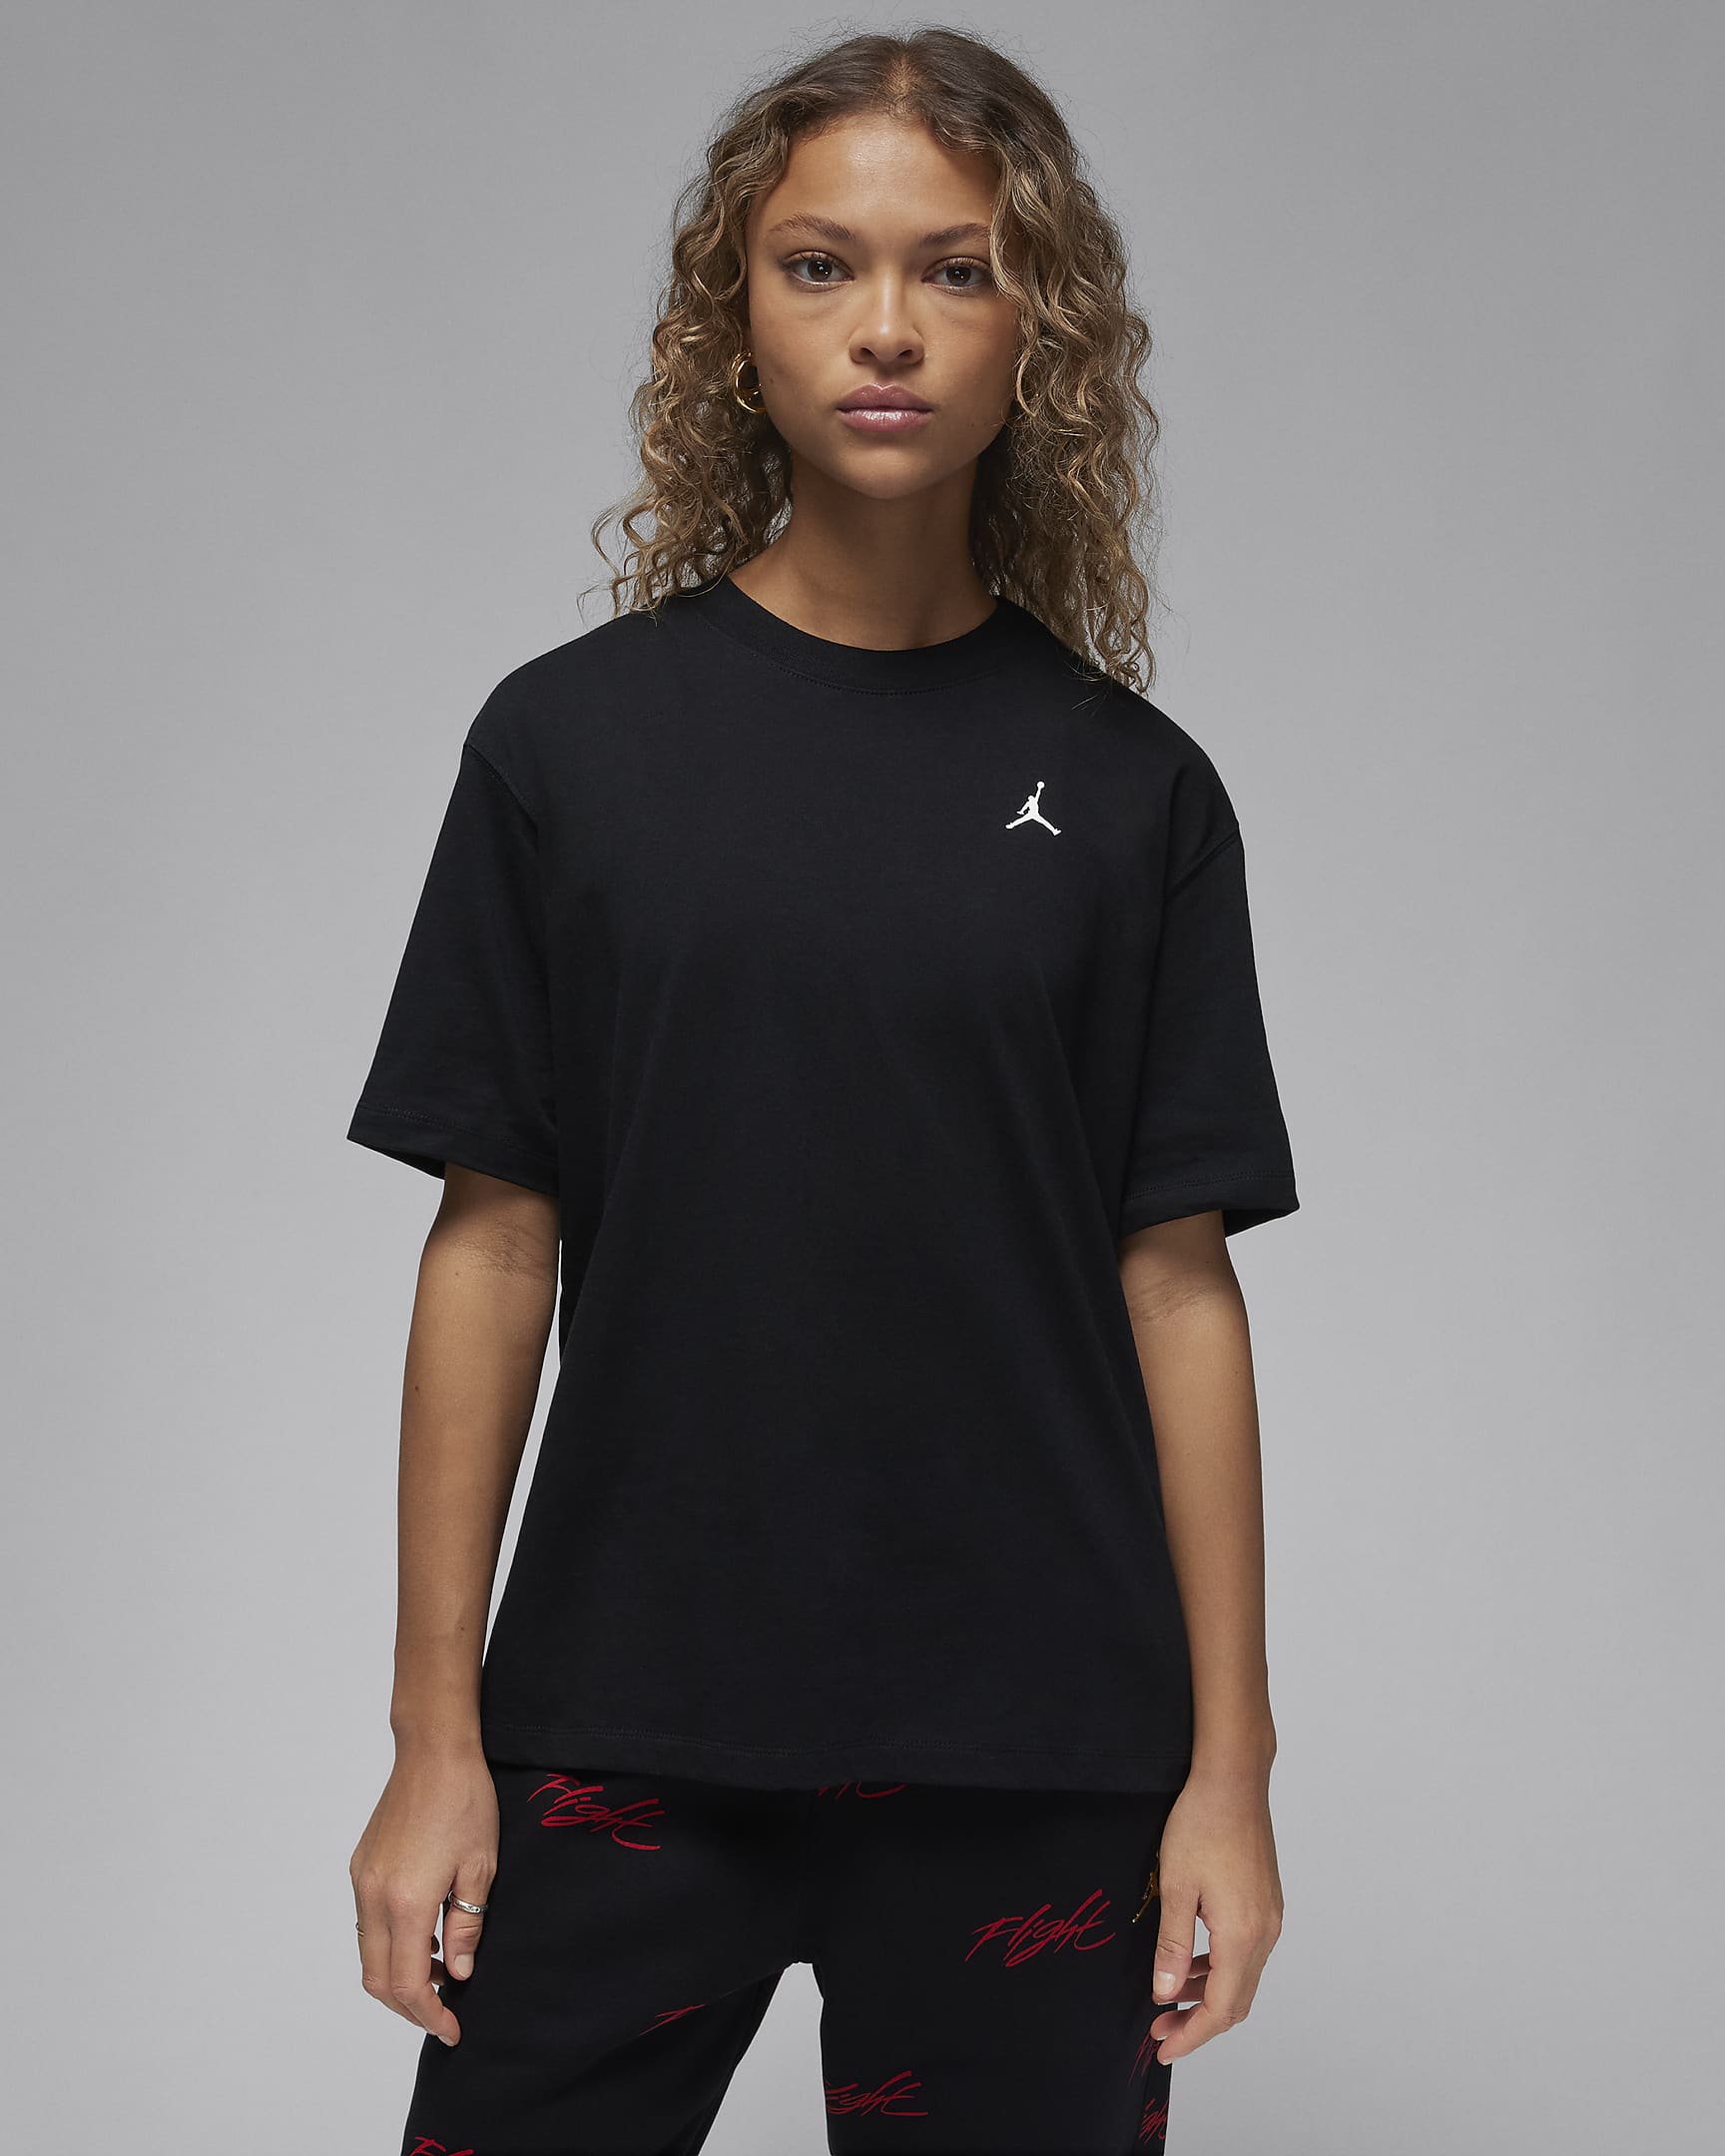 Jordan Camiseta - Mujer - Negro/Blanco